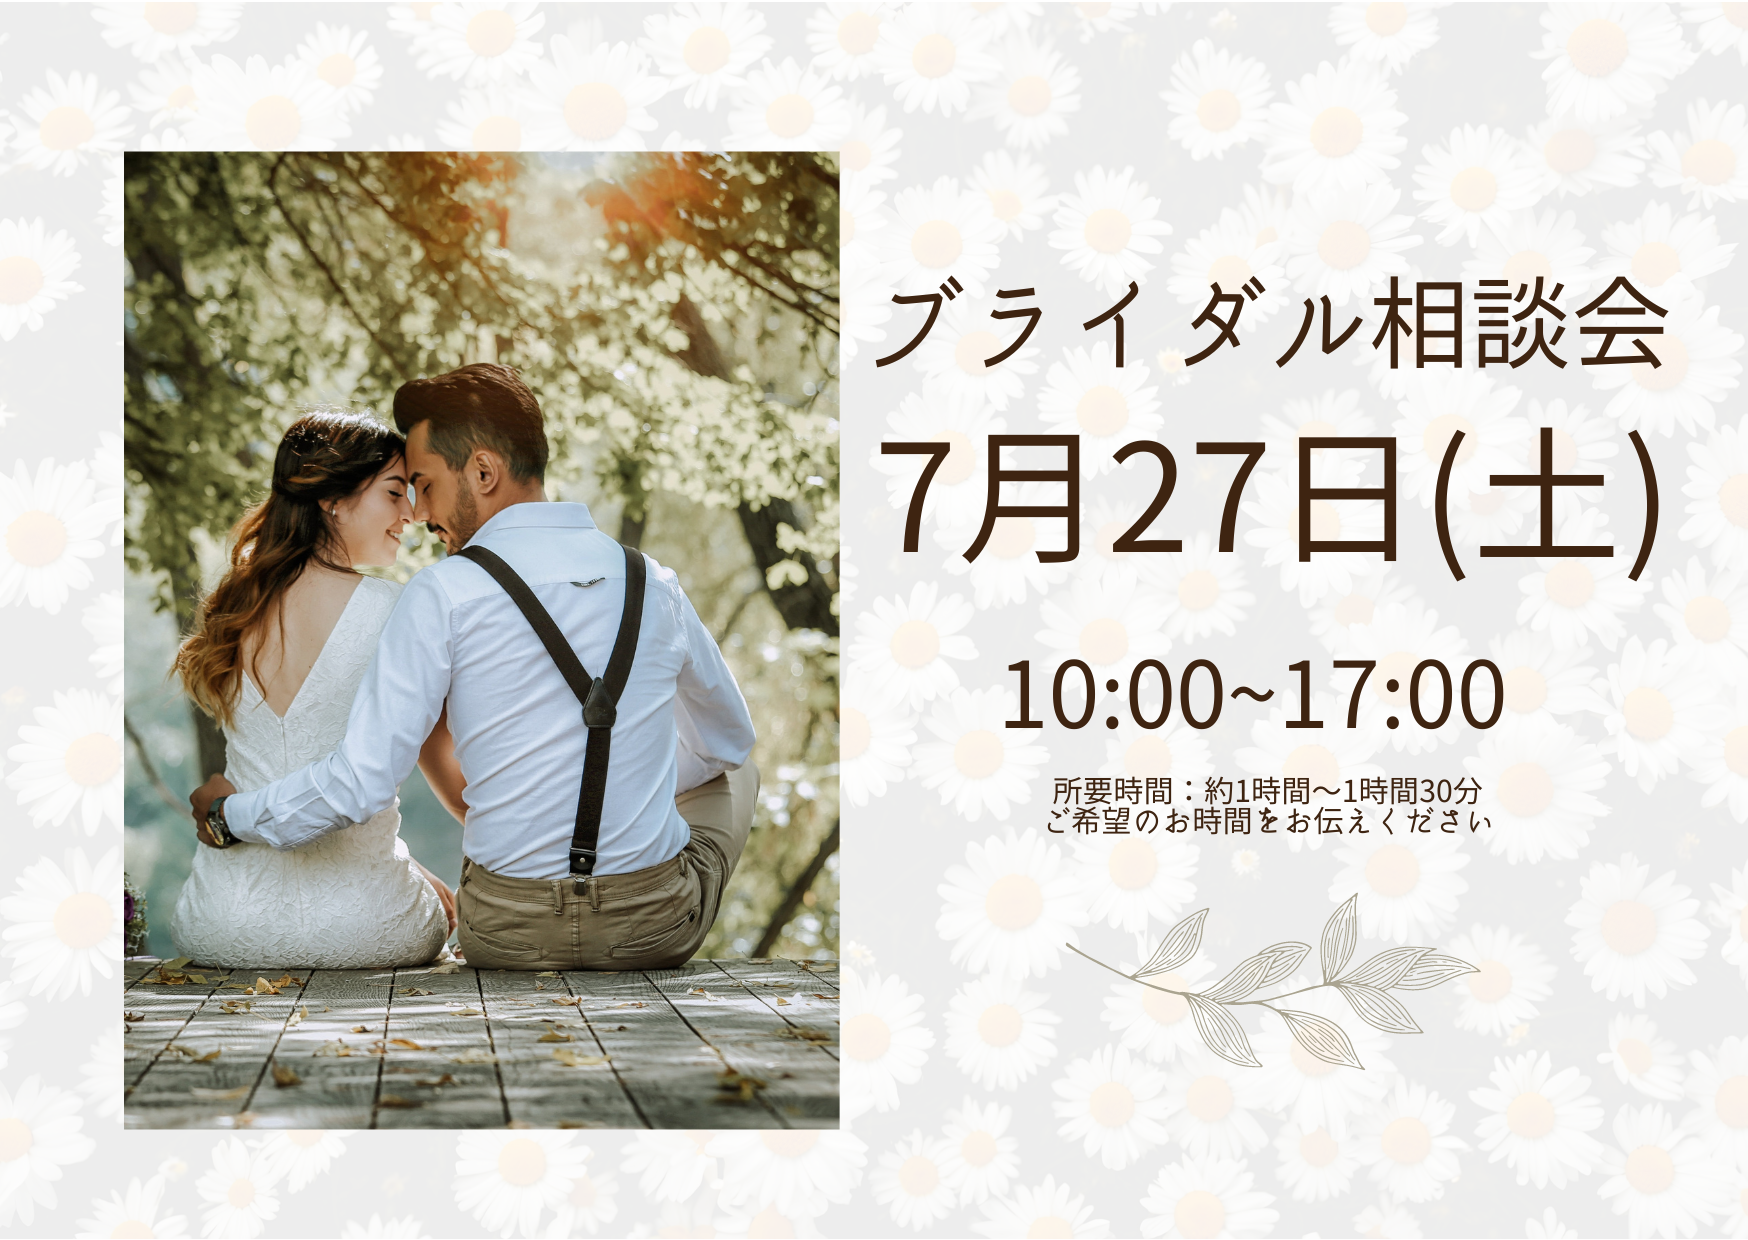 Bridal相談会【7/27(土)】